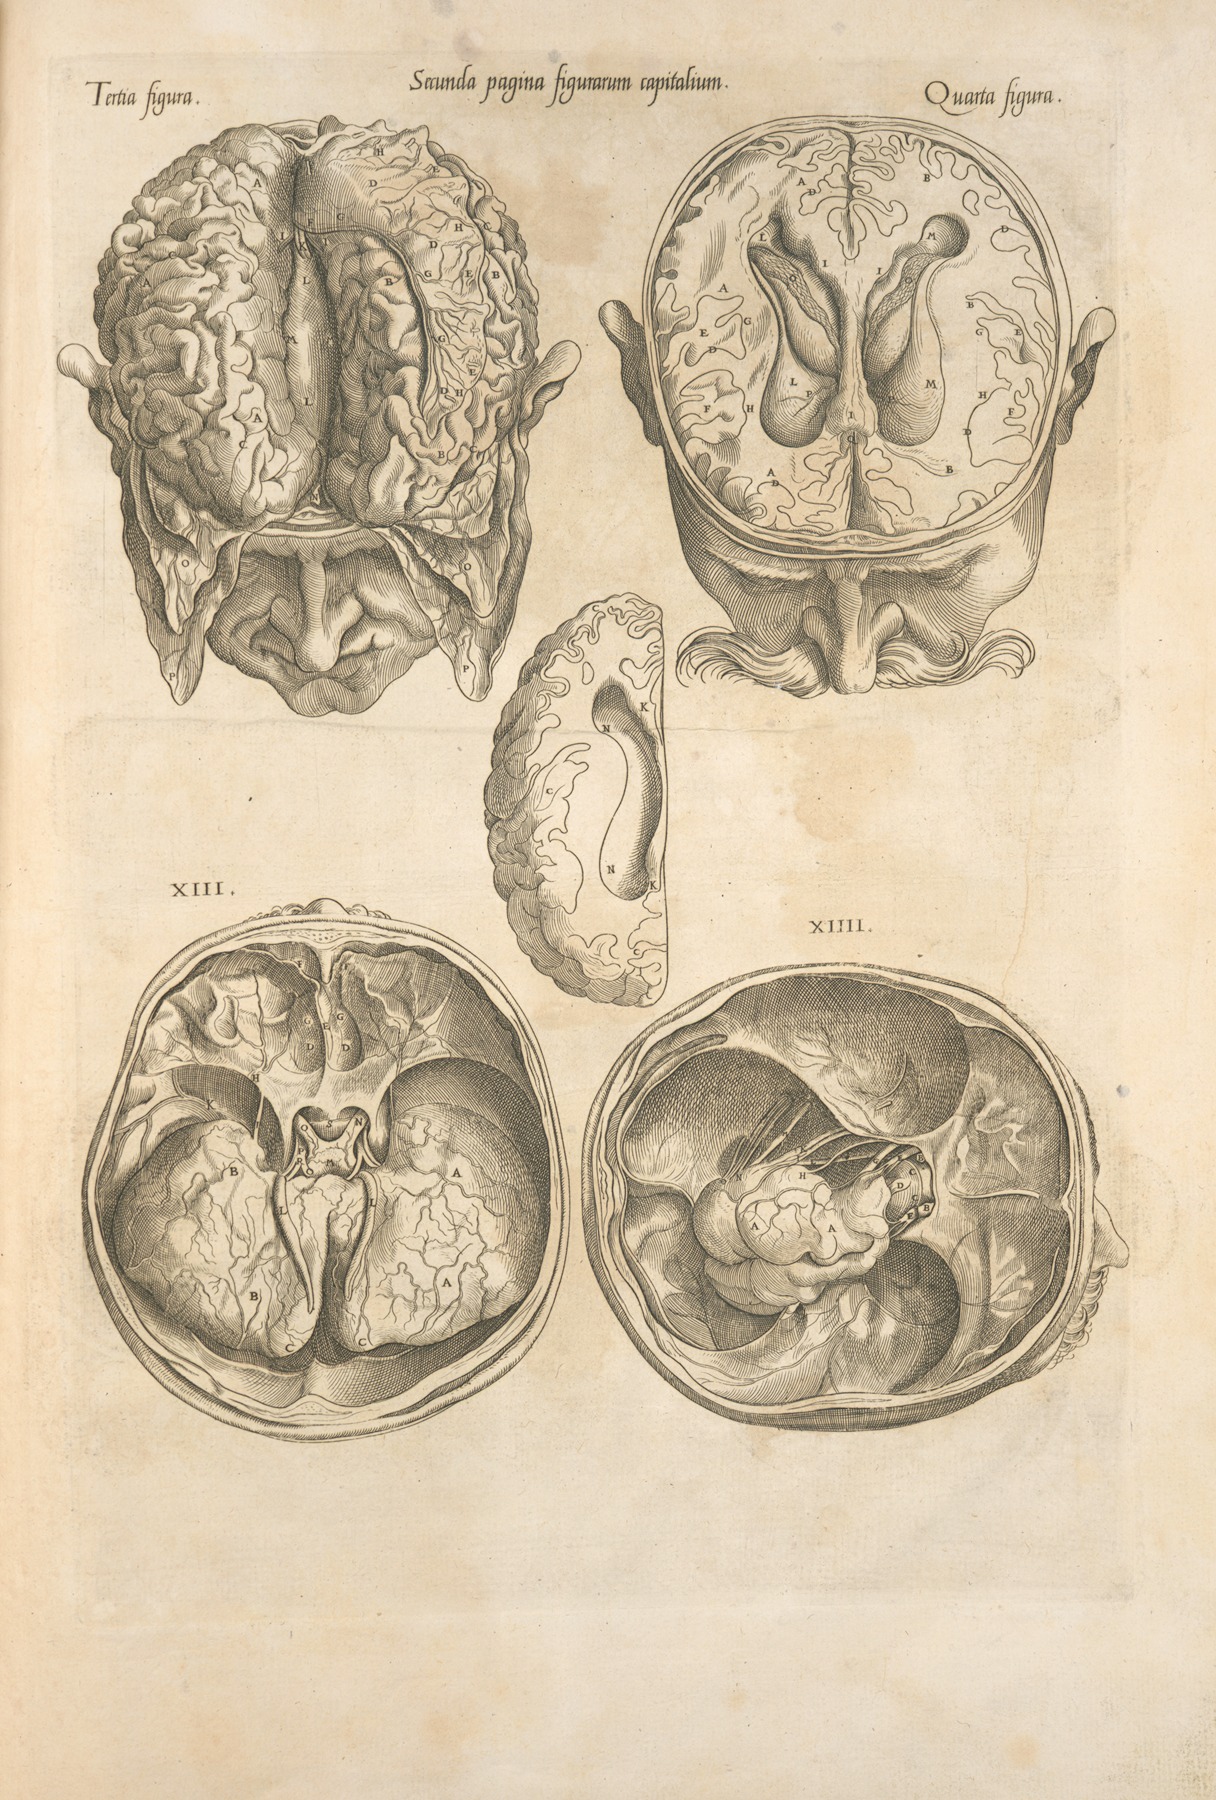 Thomas Geminus - Secunda pagina figurarum capitalium. [Human brain]